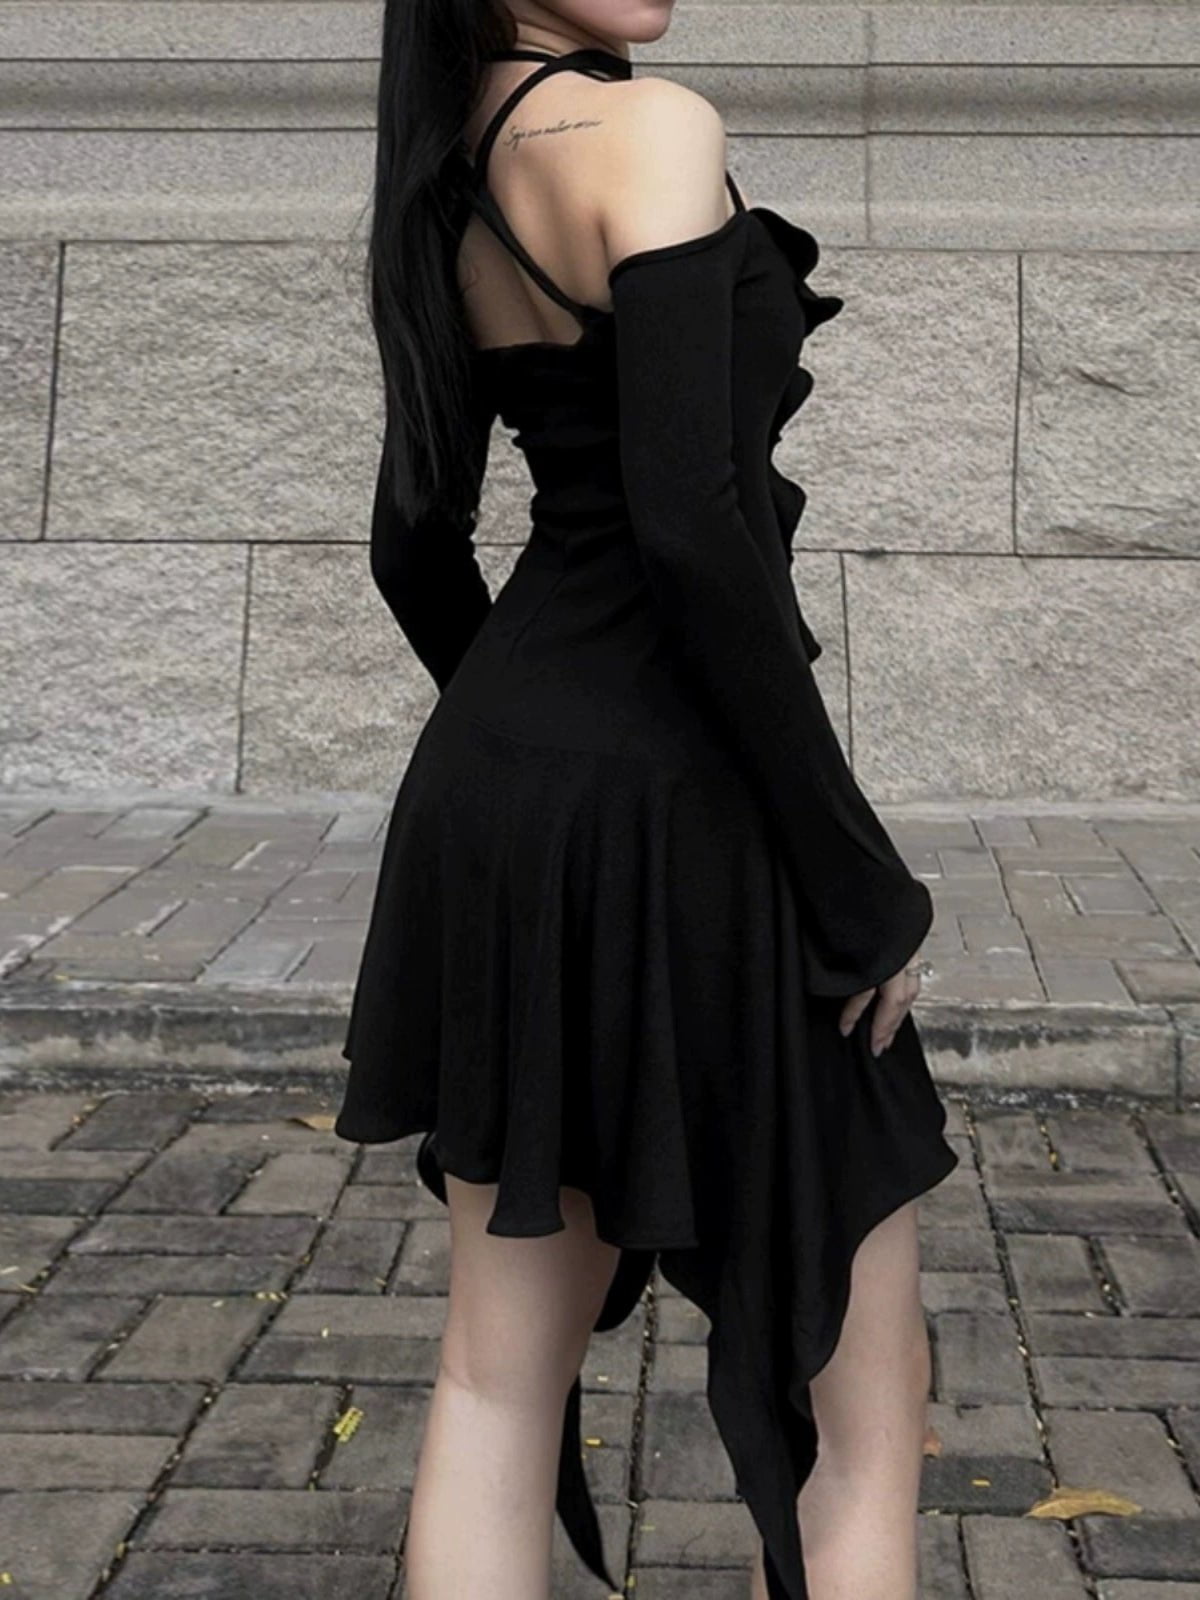 Cap Point Valeria Pure Desire Asymmetrical Design Halterneck Dress